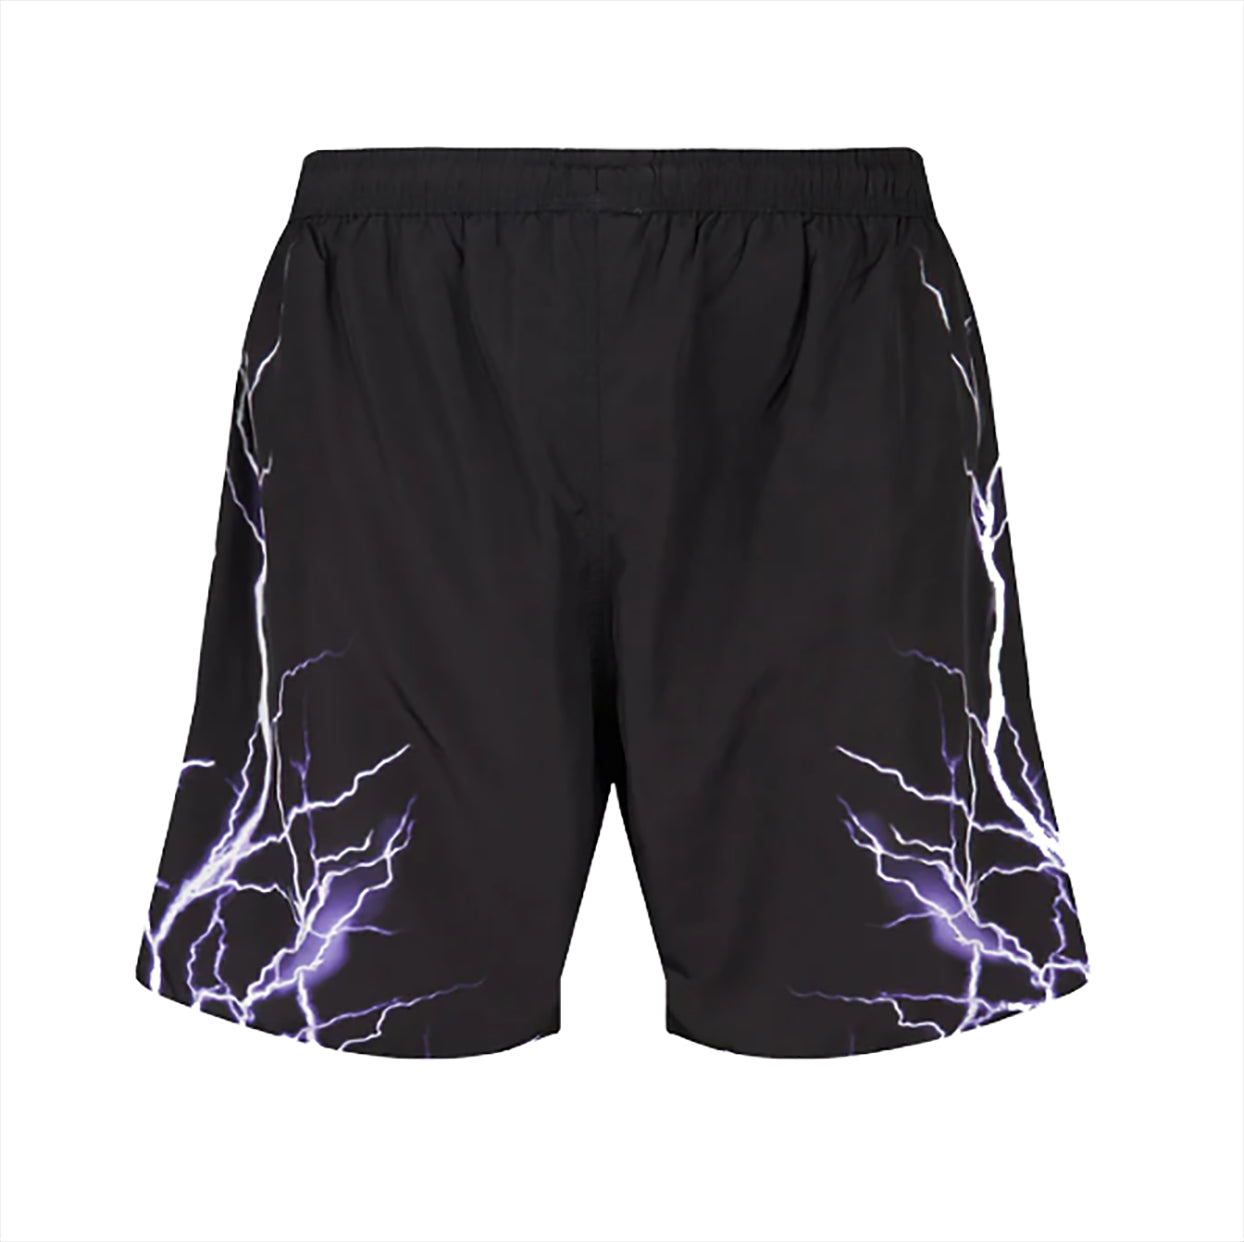 Phobia, Costume Pantaloncino Uomo Lightning Swimwear, Black/purple